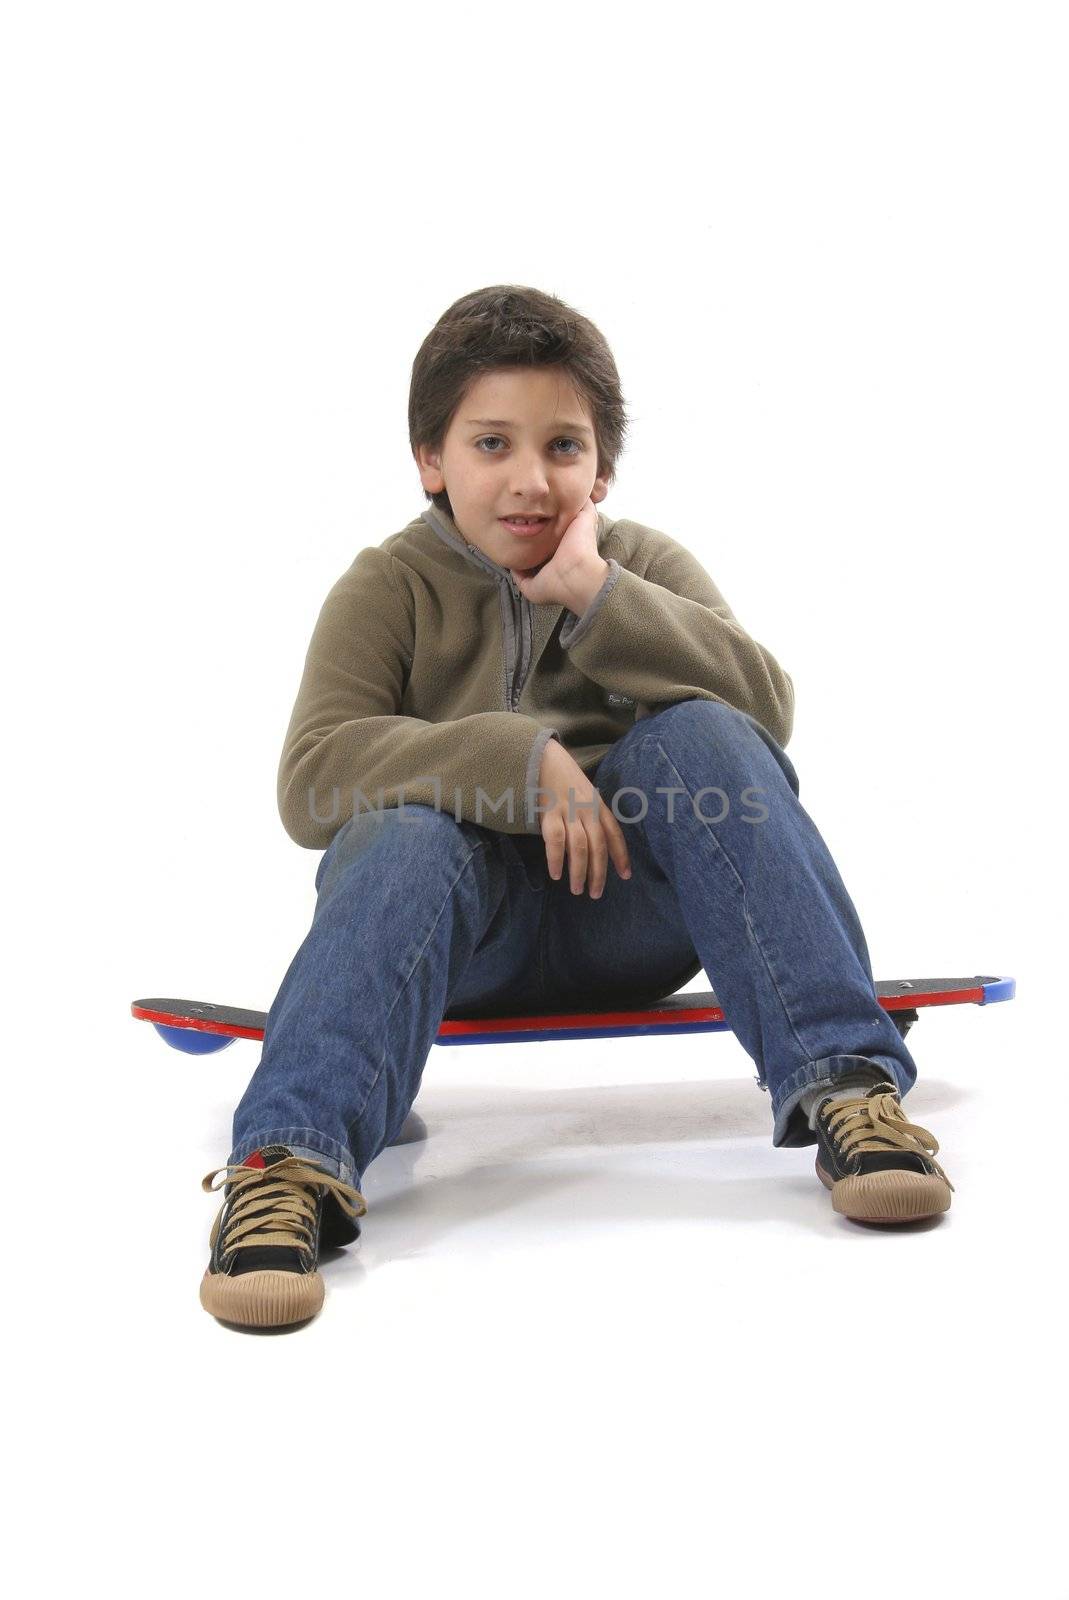 Cool skater boy by Erdosain